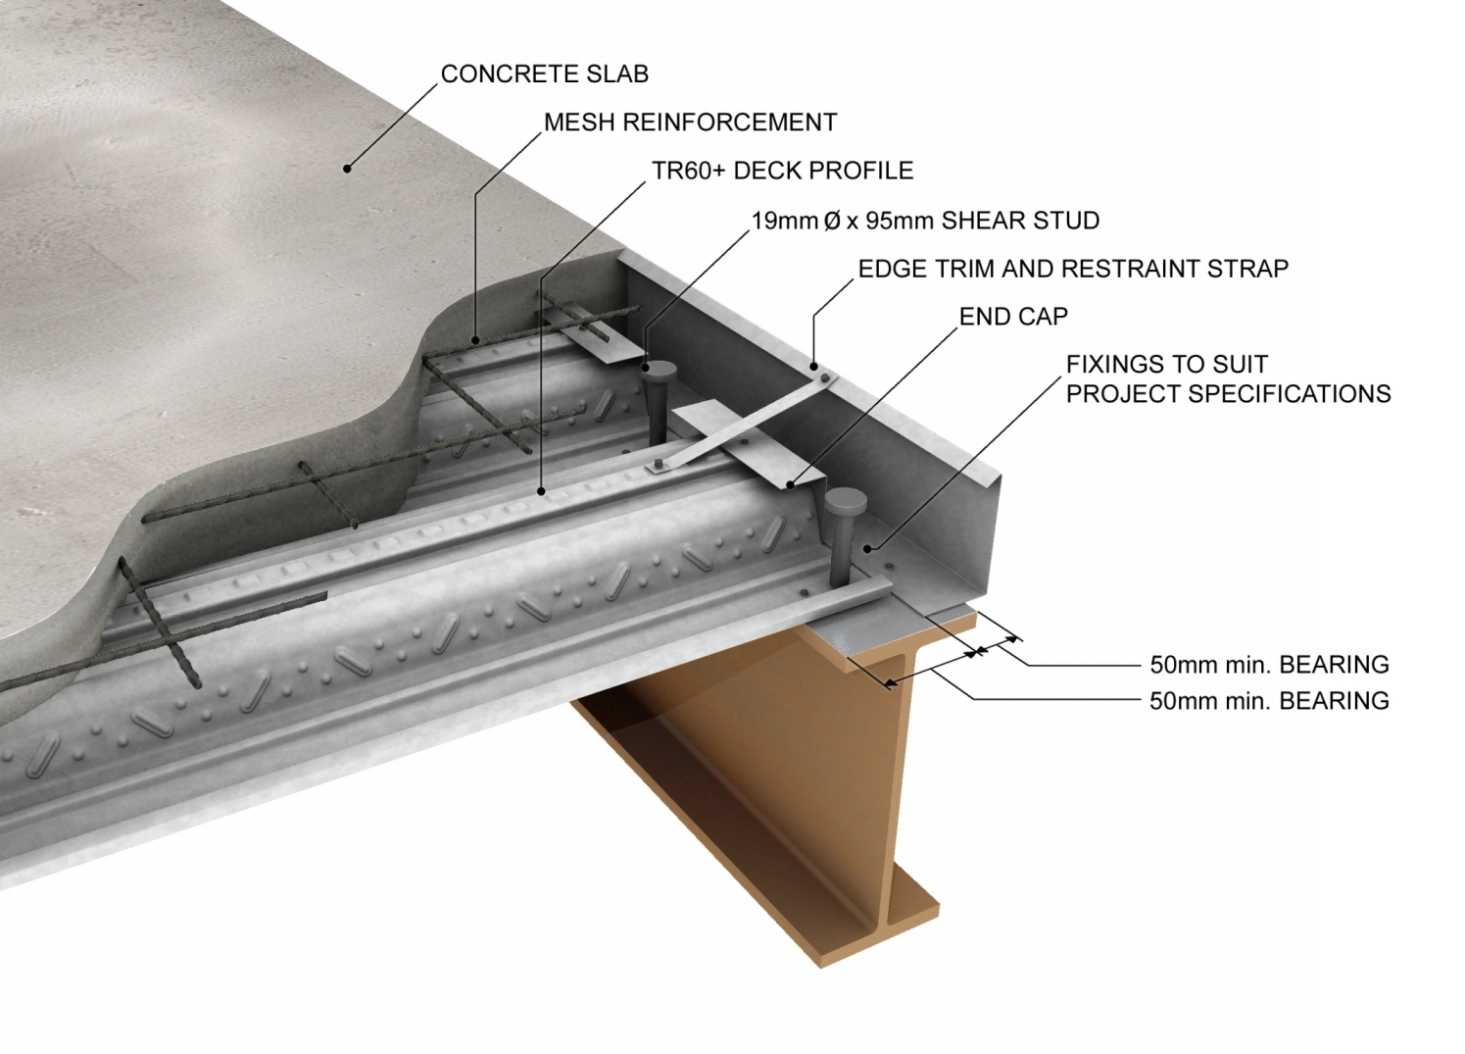 Steel Deck For Concrete Slab - HD Wallpaper 